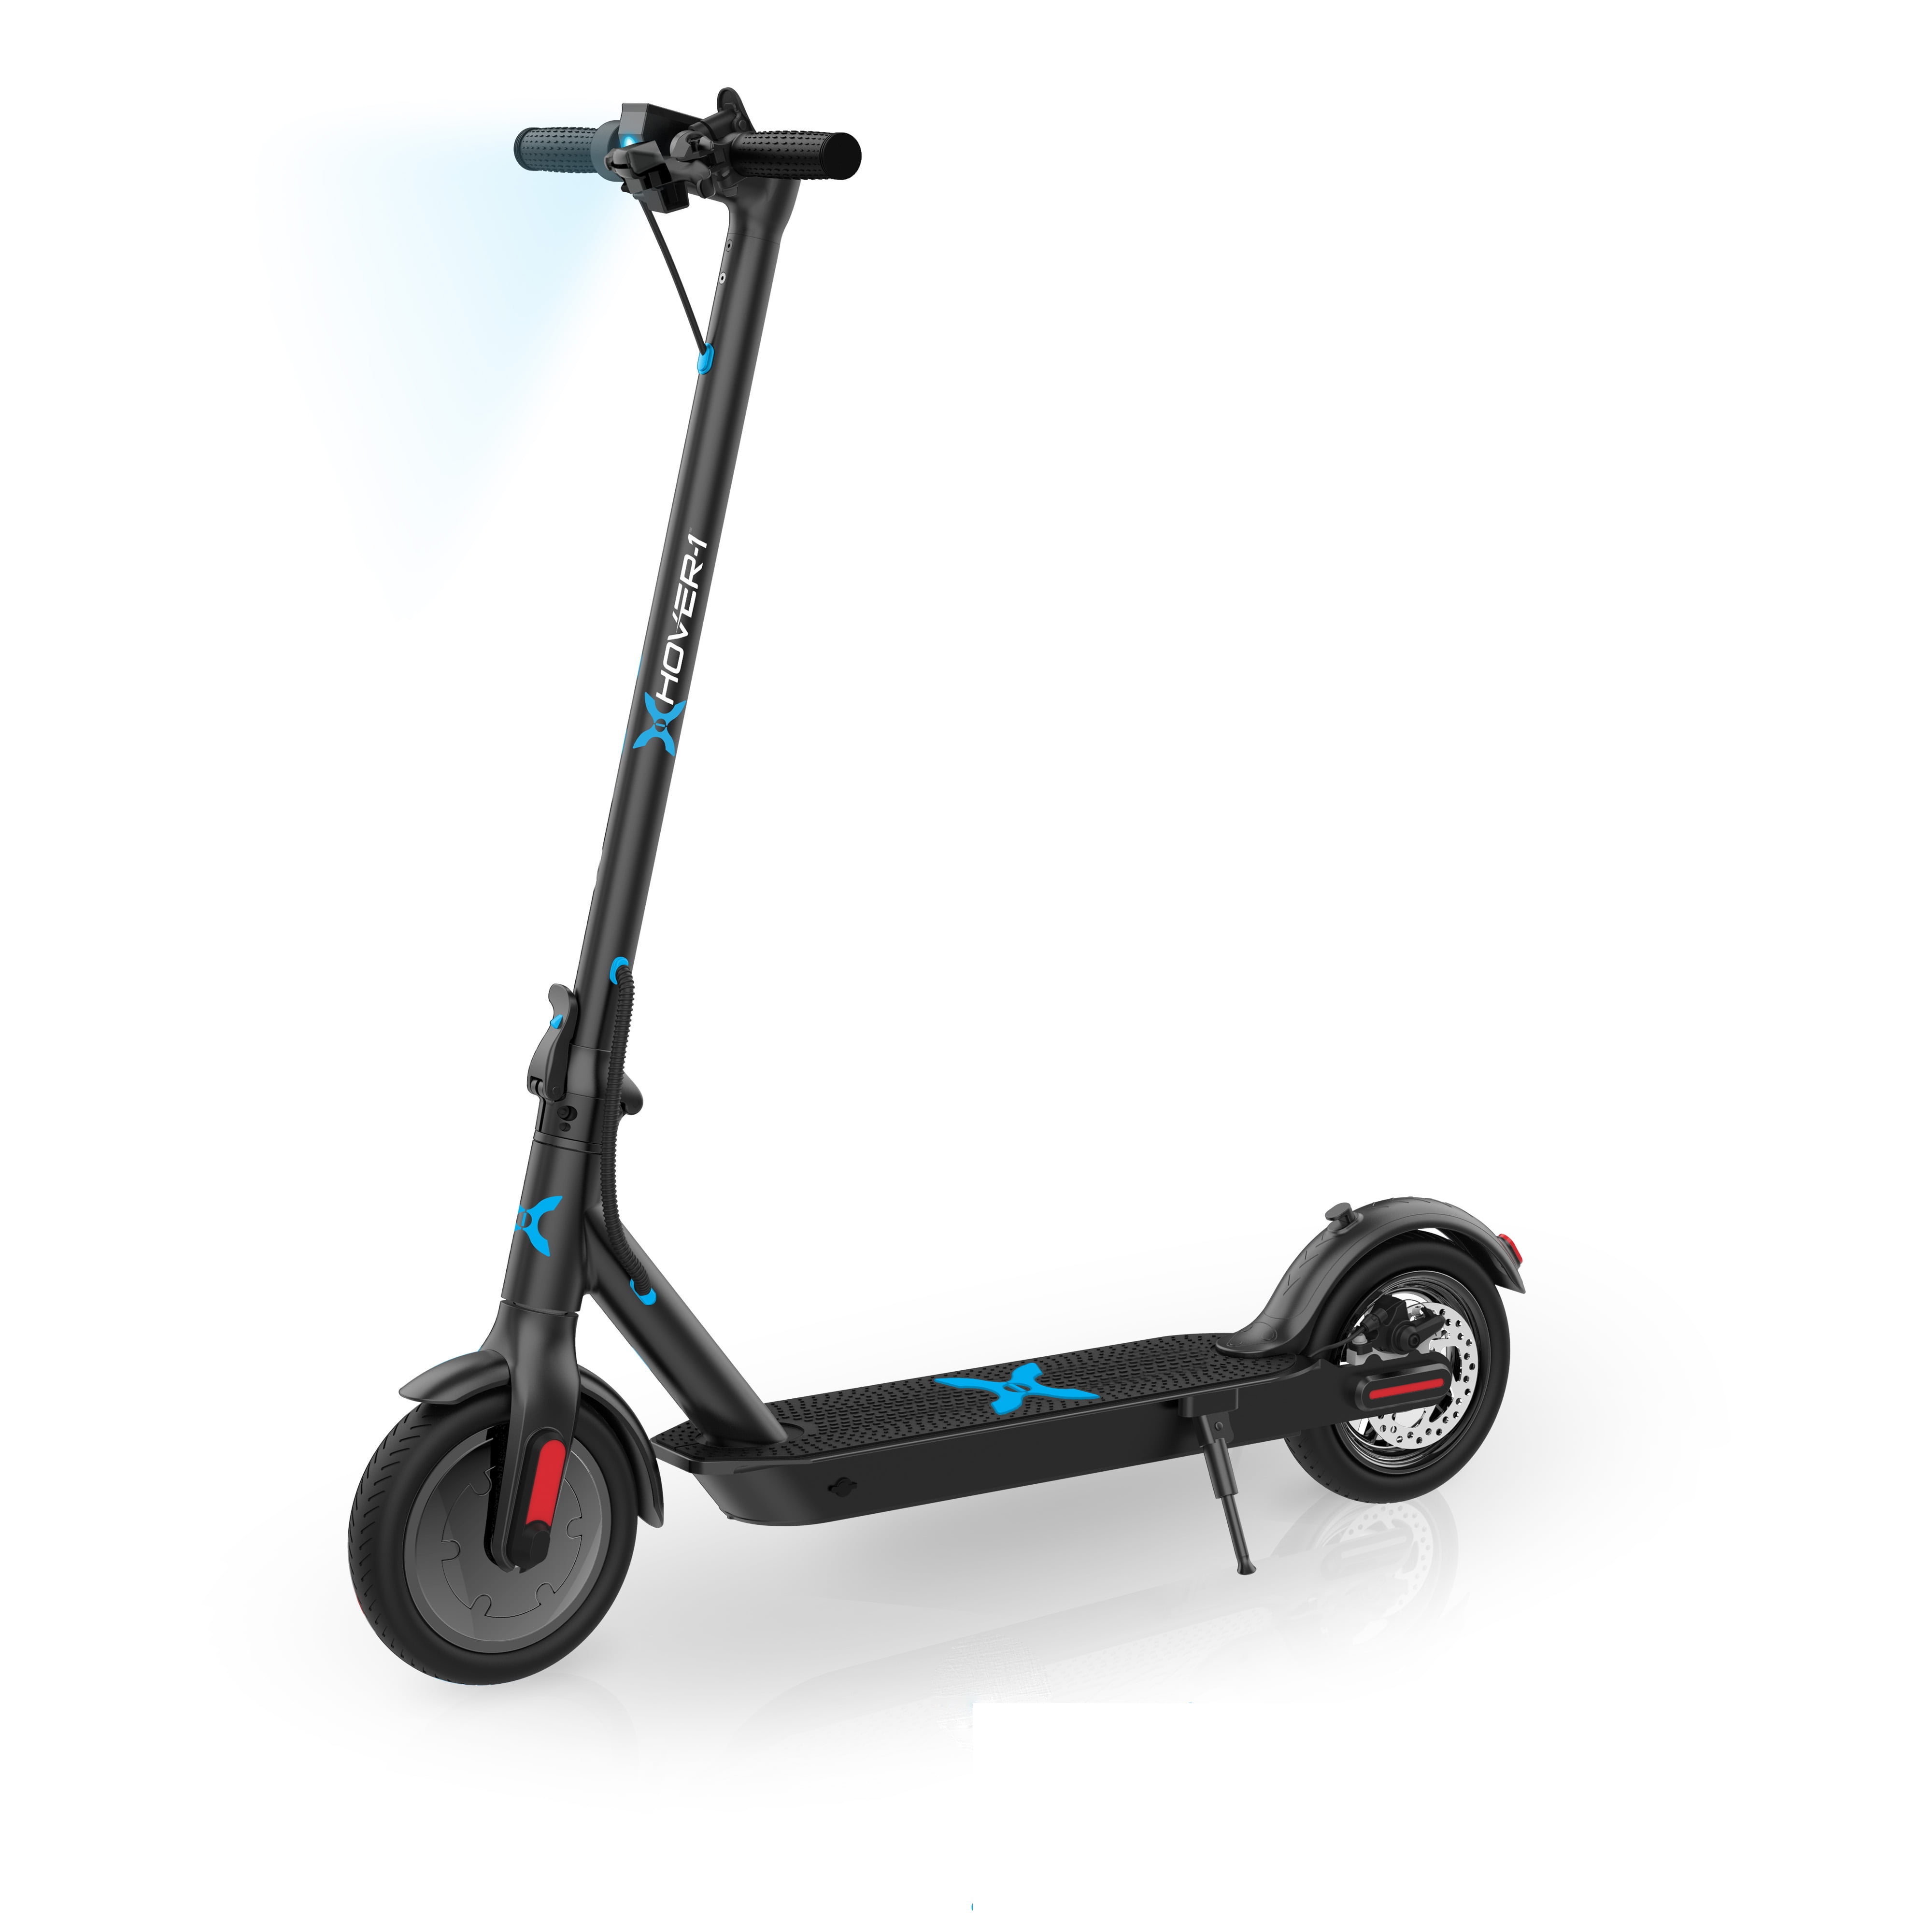 the vega scooter walmart